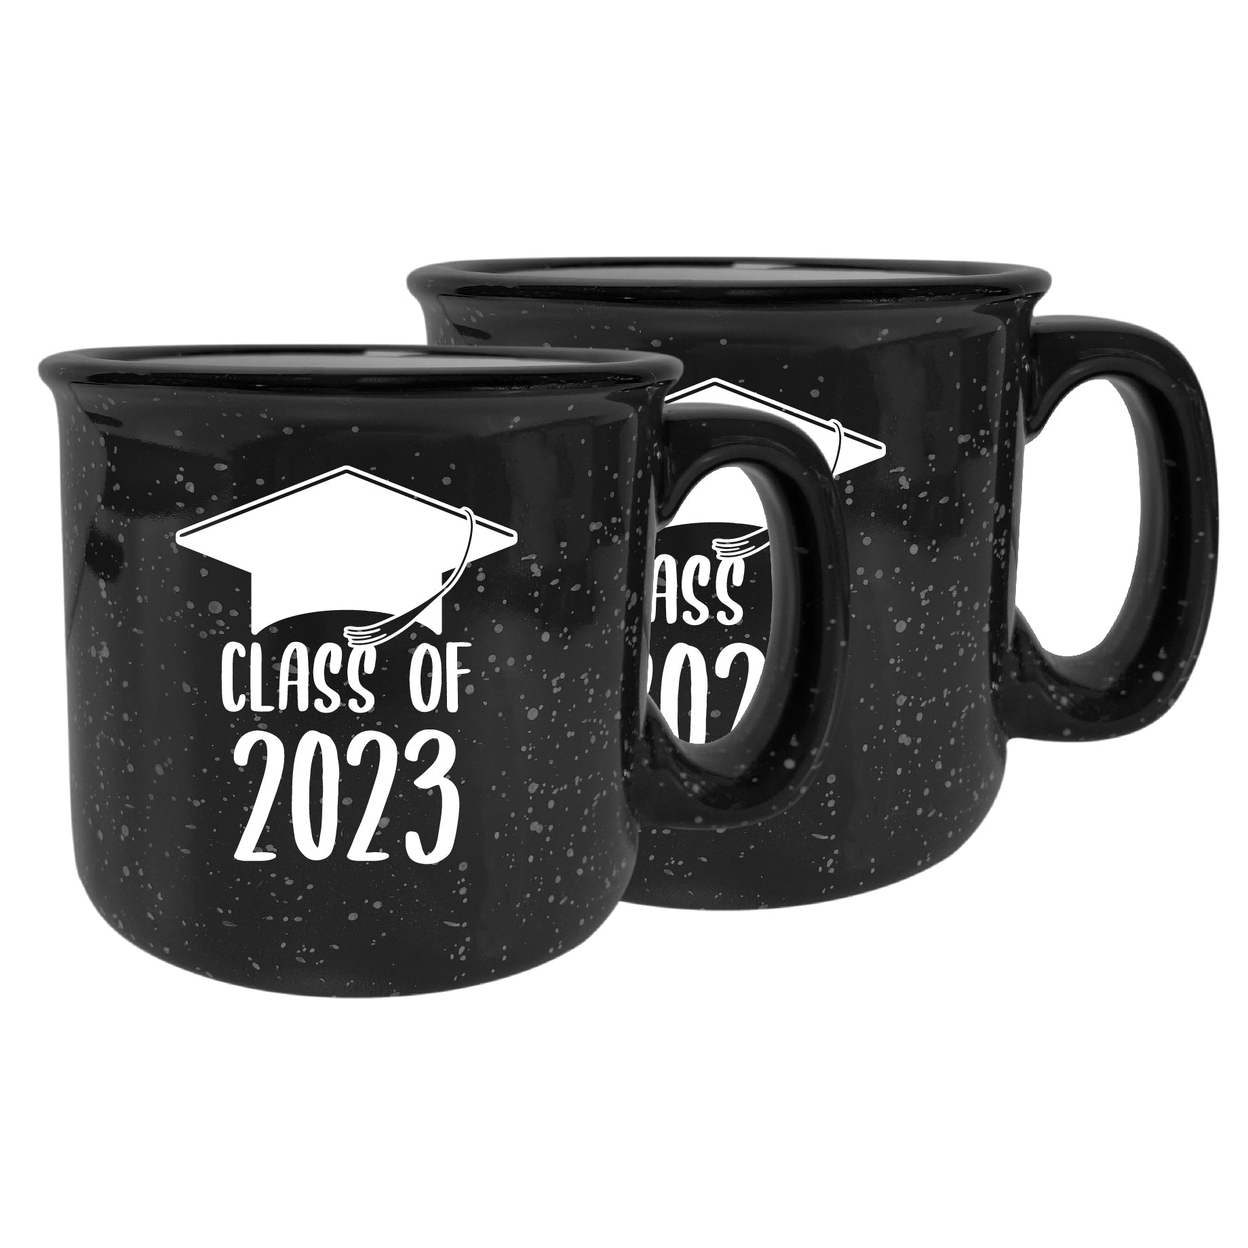 Class Of 2023 Grad Speckled Ceramic Camper Coffee Mug 16oz - Blue, Single